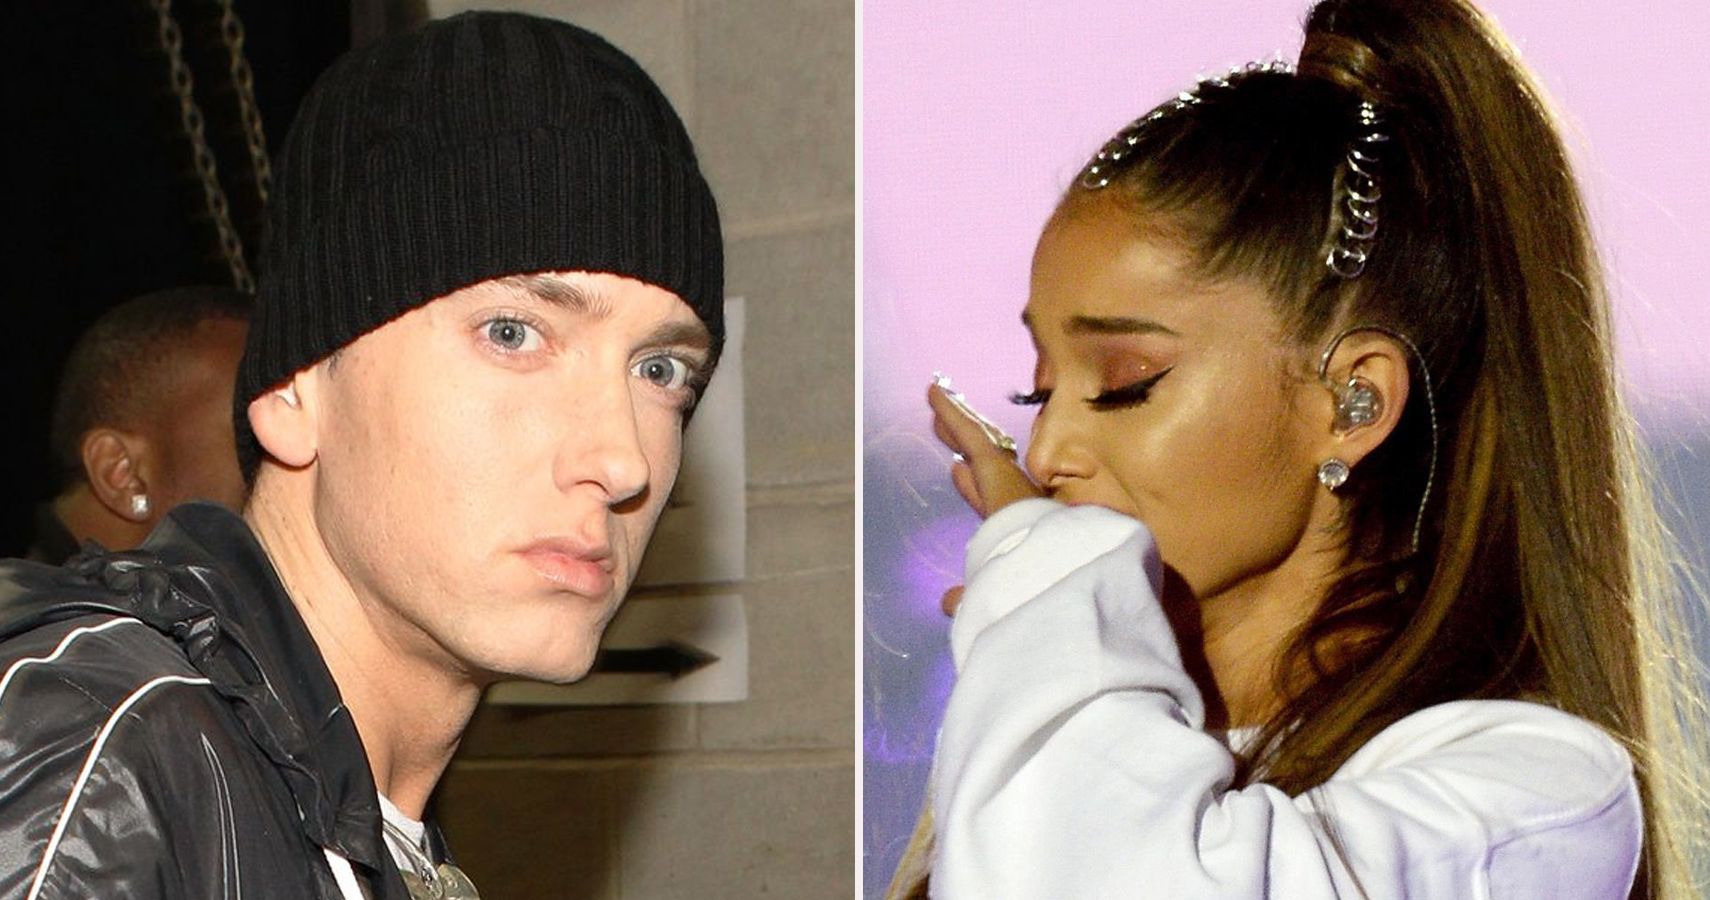 What Does Ariana Grande Think About Eminem's Lyrics?